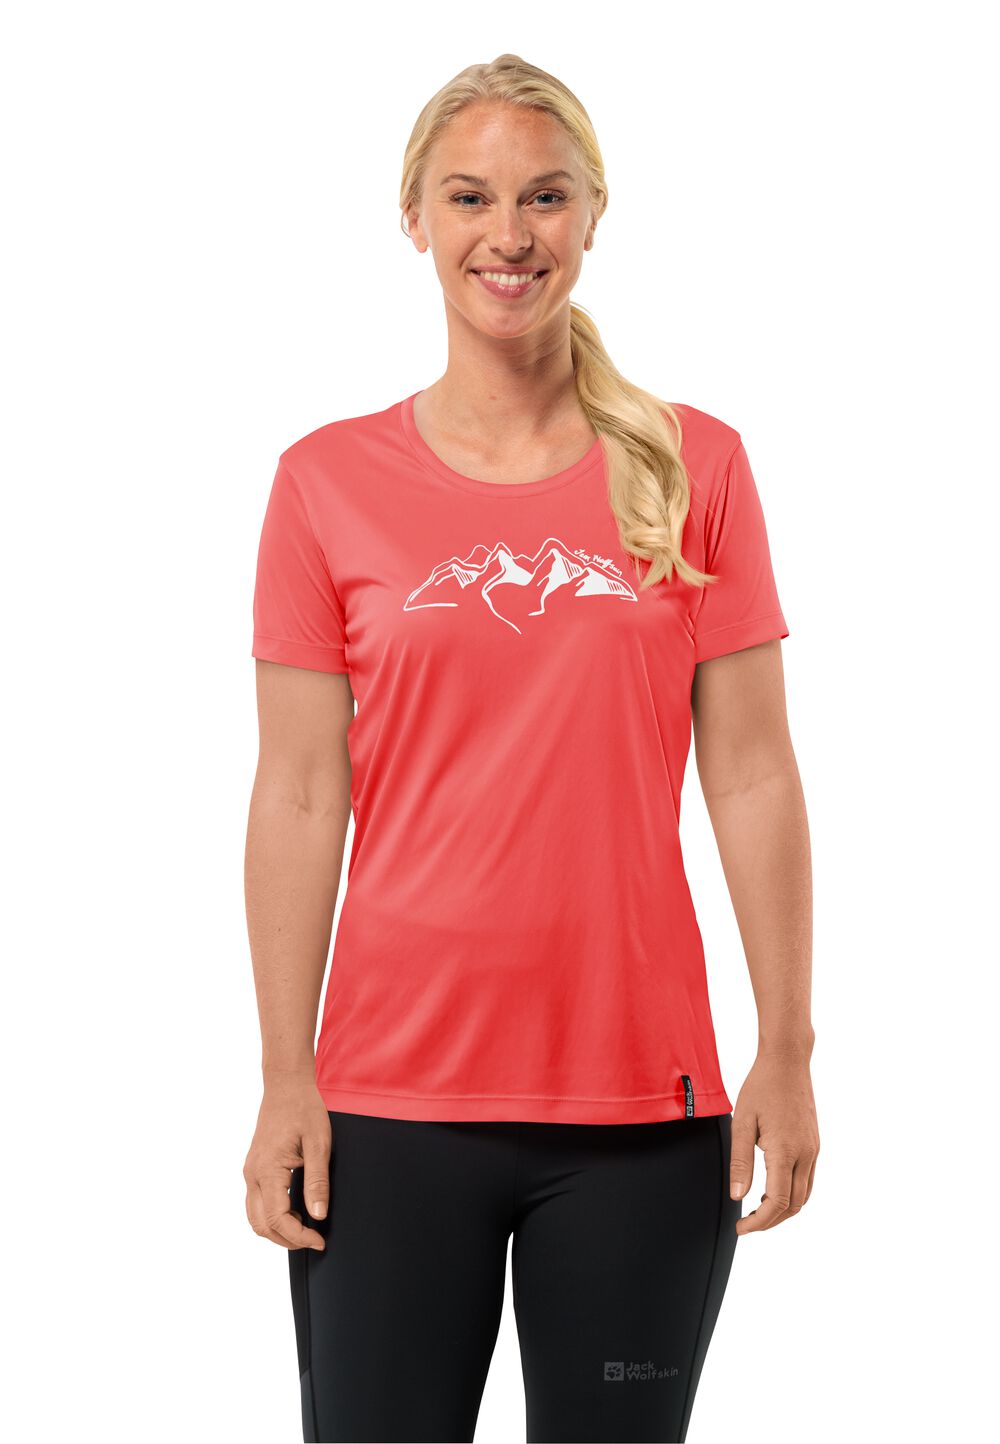 Jack Wolfskin Peak Graphic T-Shirt Women Functioneel shirt Dames M rood vibrant red